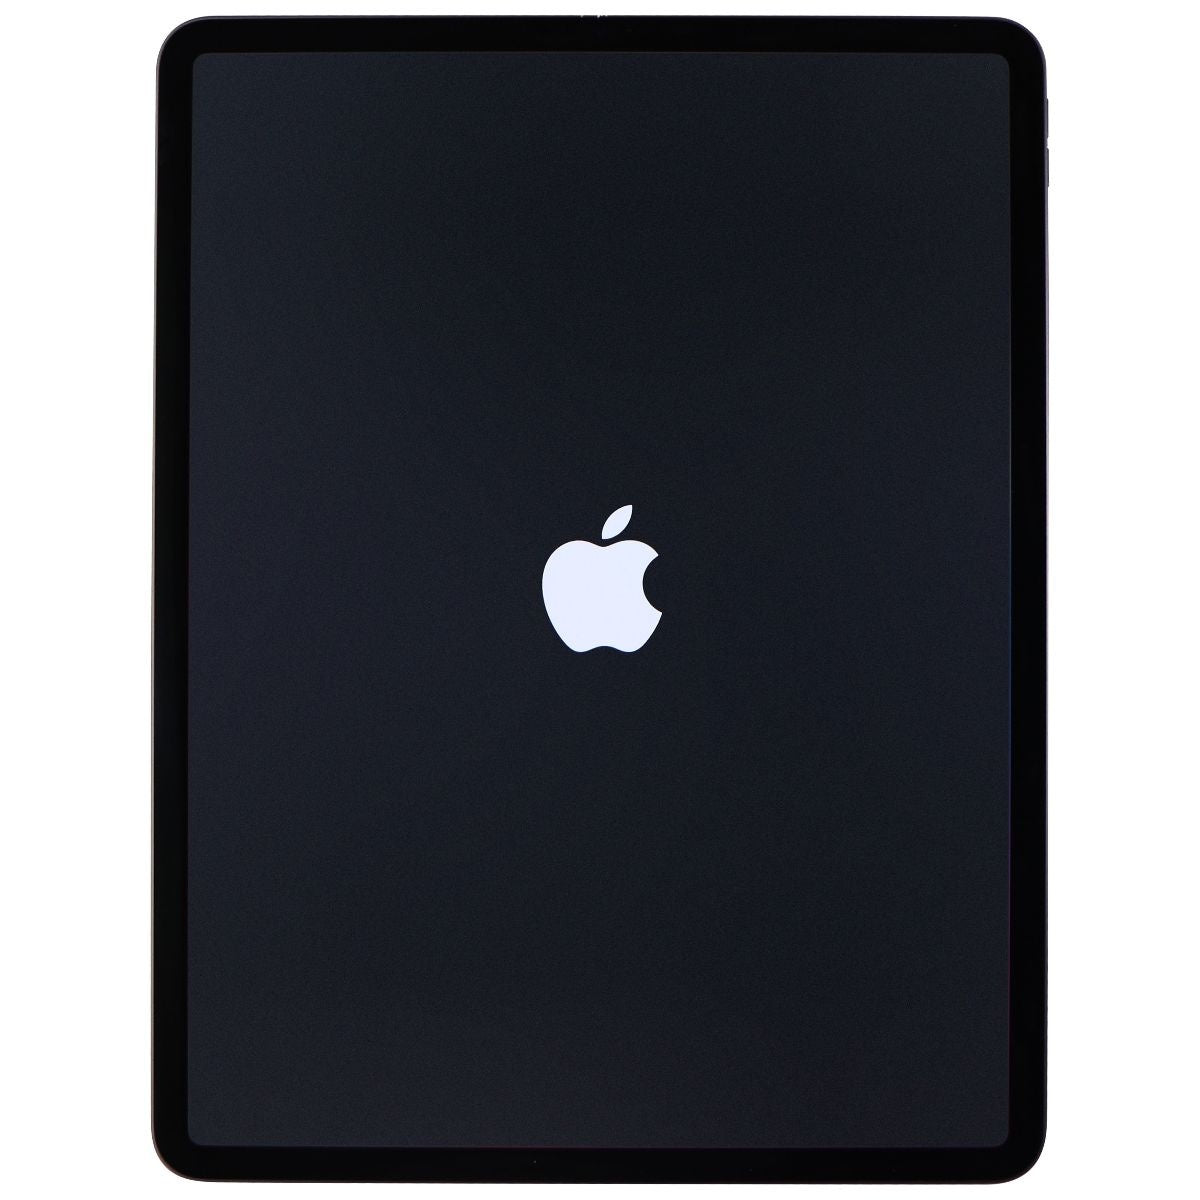 Apple iPad Pro 12.9 (3rd Gen) A1876 (WiFi) 256GB Space Gray (Used